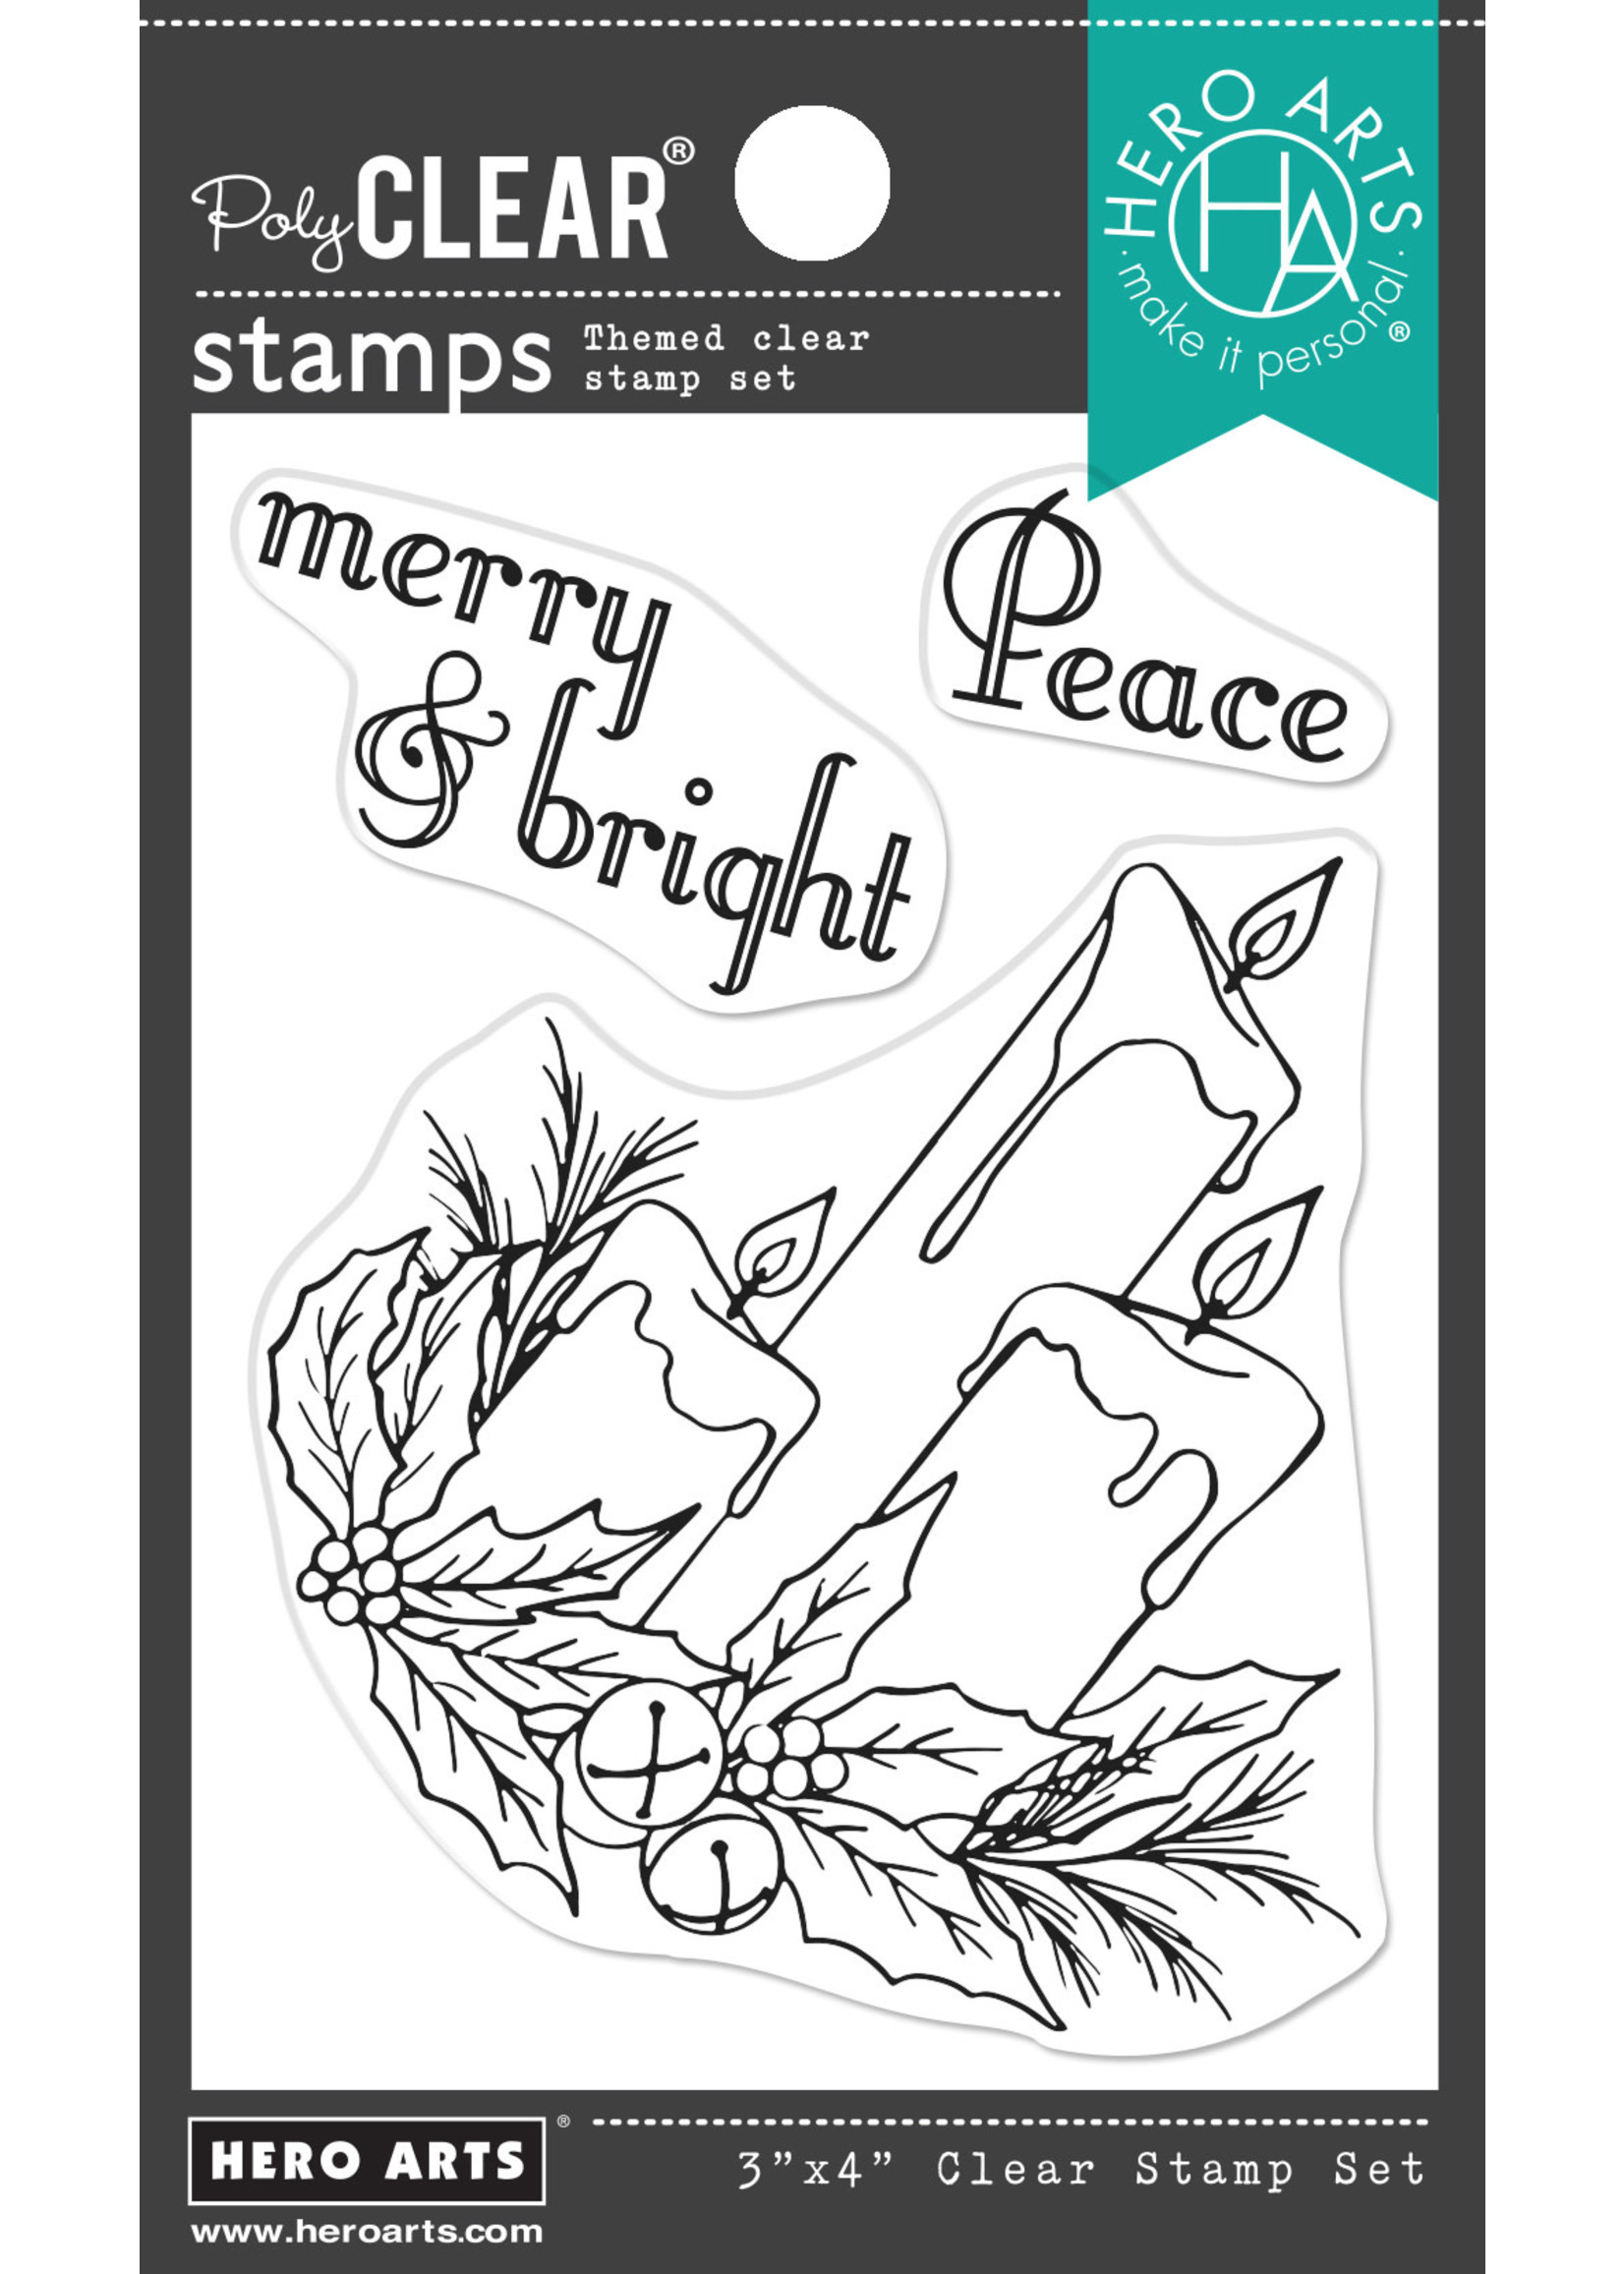 HERO ARTS Holiday Candle Arrangement Stamp